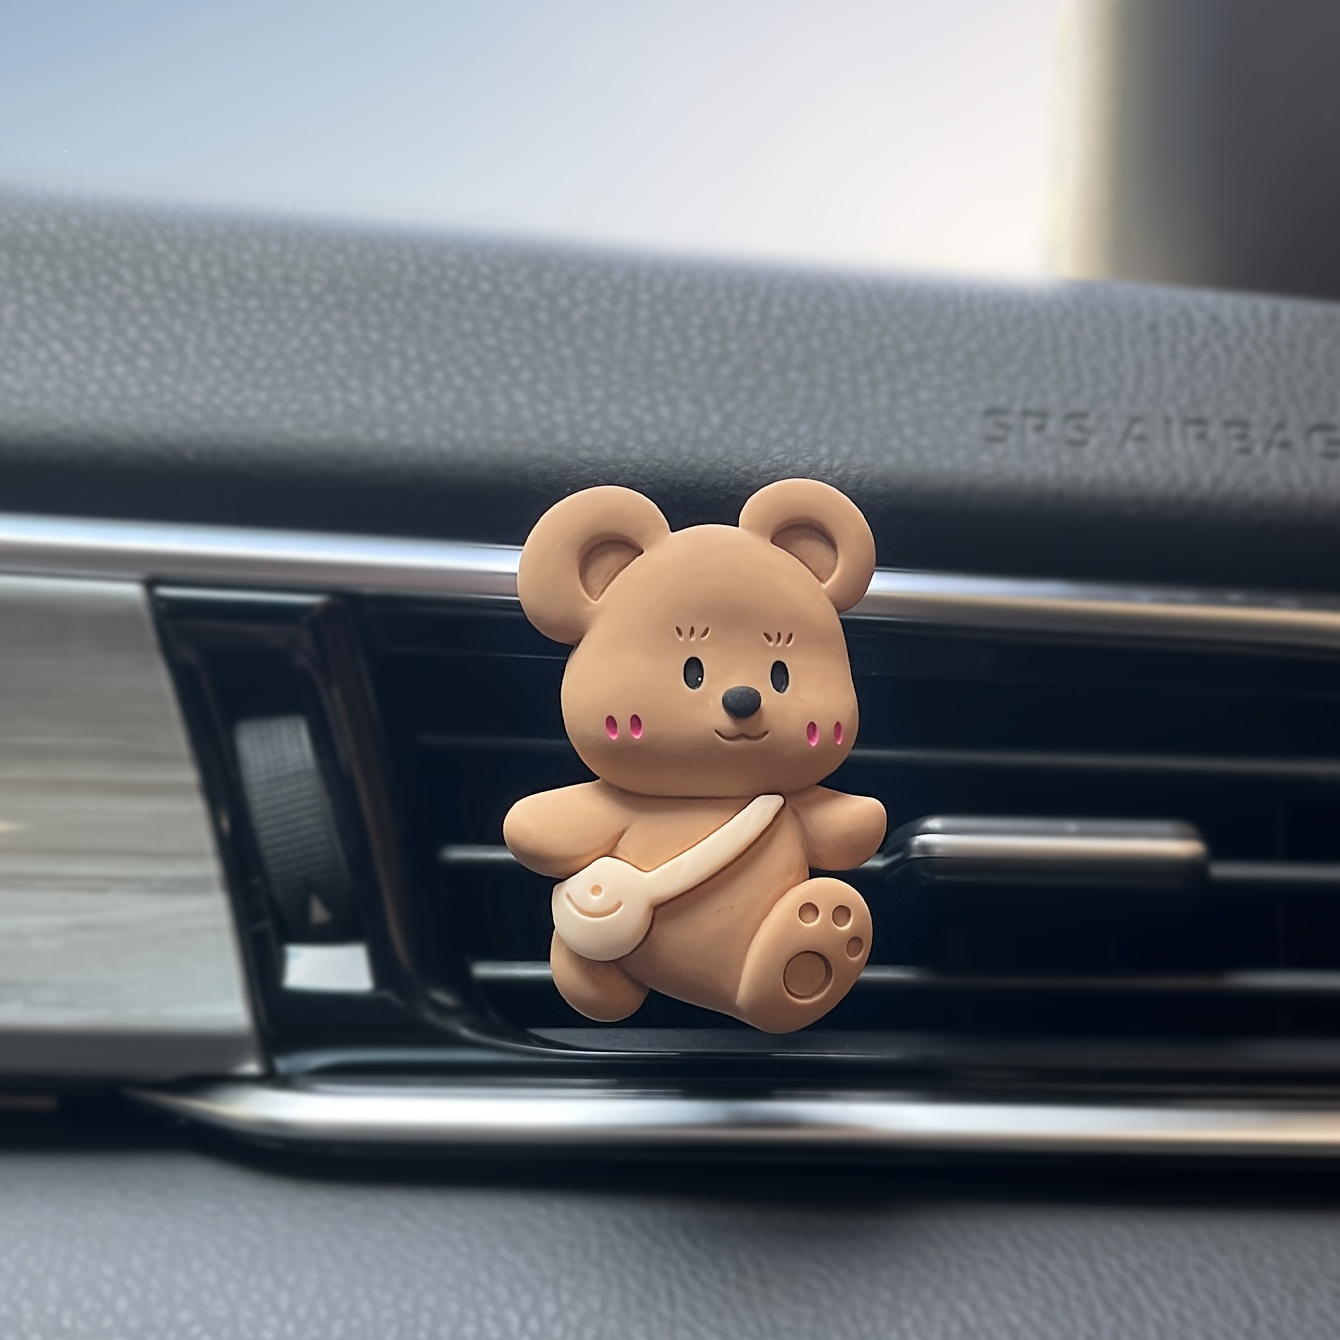 Bear Car Decor Interior, Cute Car Accessories, Soft Washable Plush